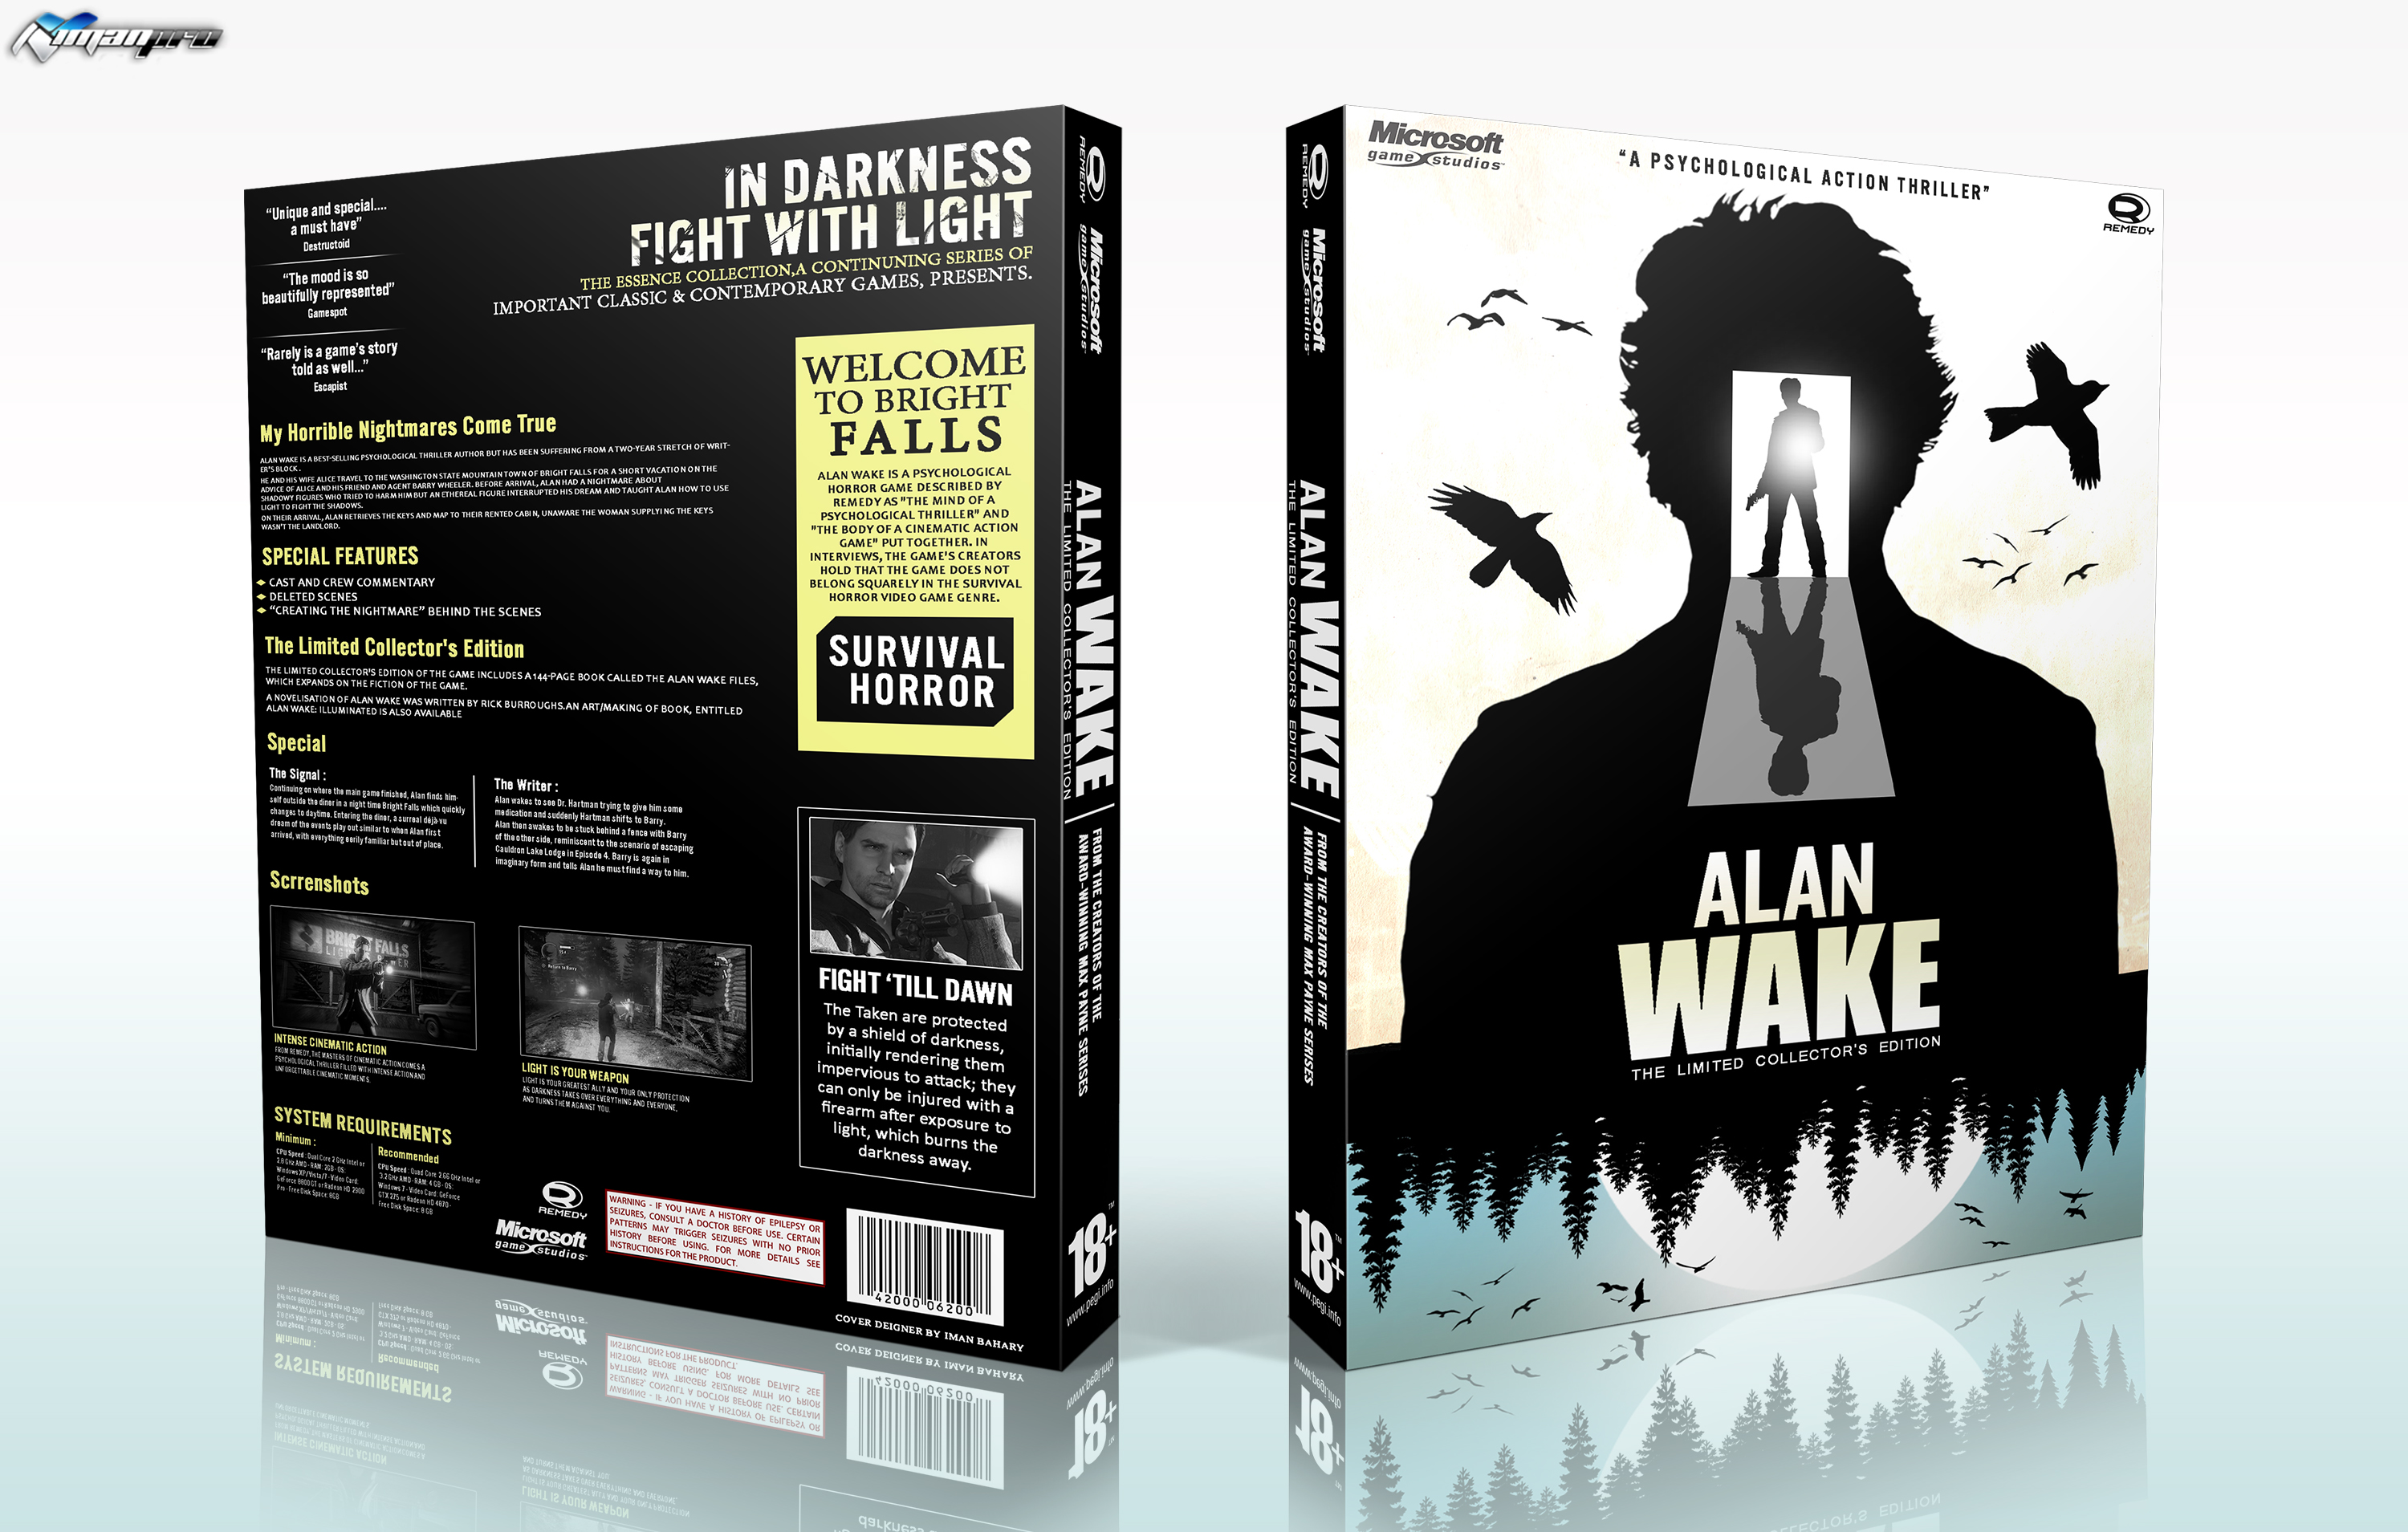 Alan Wake - GameSpot